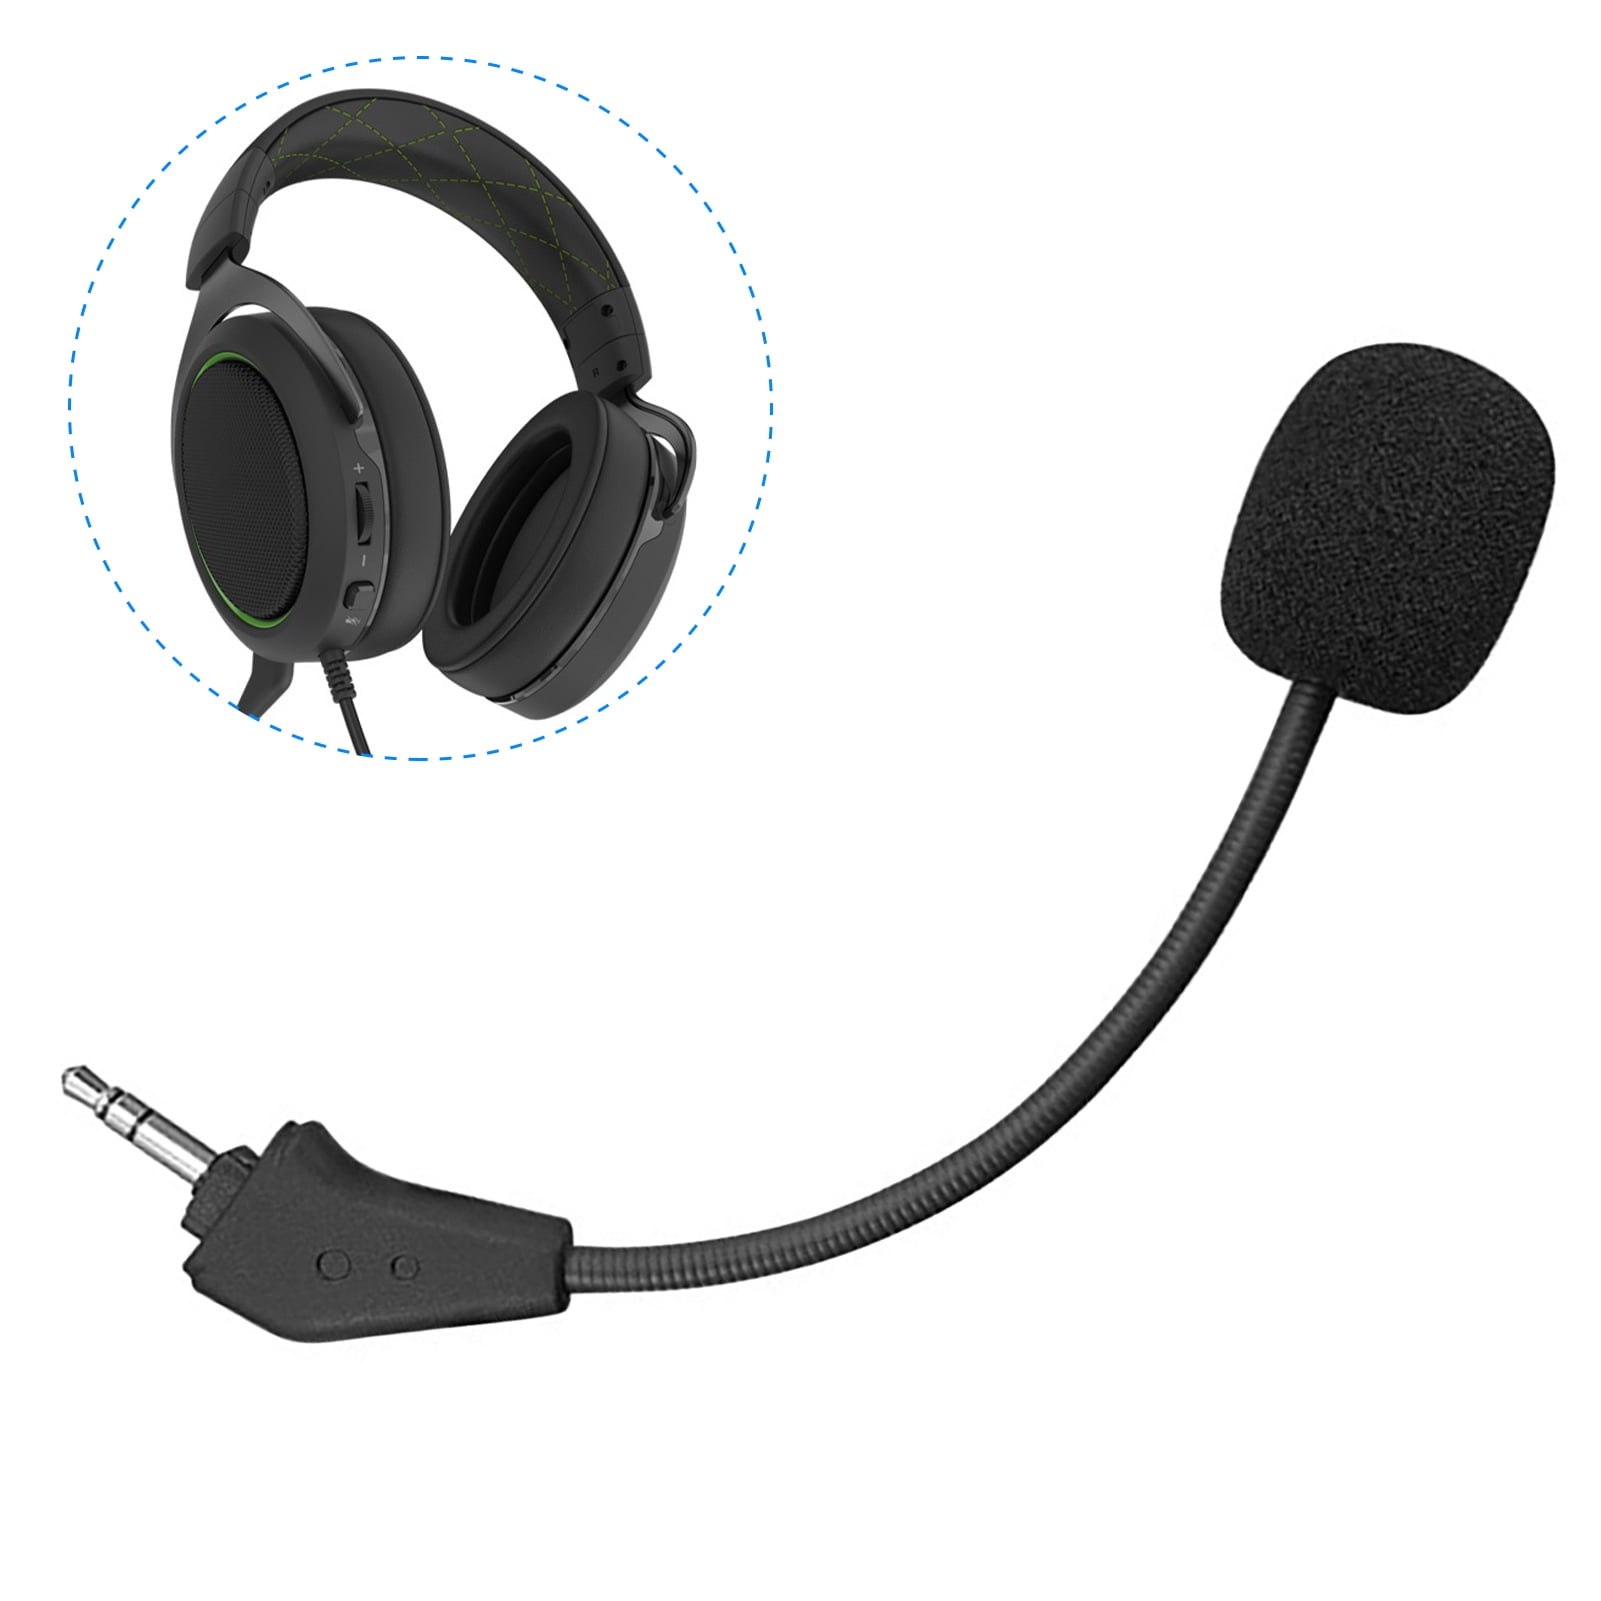 Allergie Relativiteitstheorie Onverschilligheid Ybeauty Headphone Microphone Noise Reduction Detachable Flexible 3.5mm  Gaming Headset Boom MIC Replacement for Corsair HS50 Pro HS60 HS70 -  Walmart.com